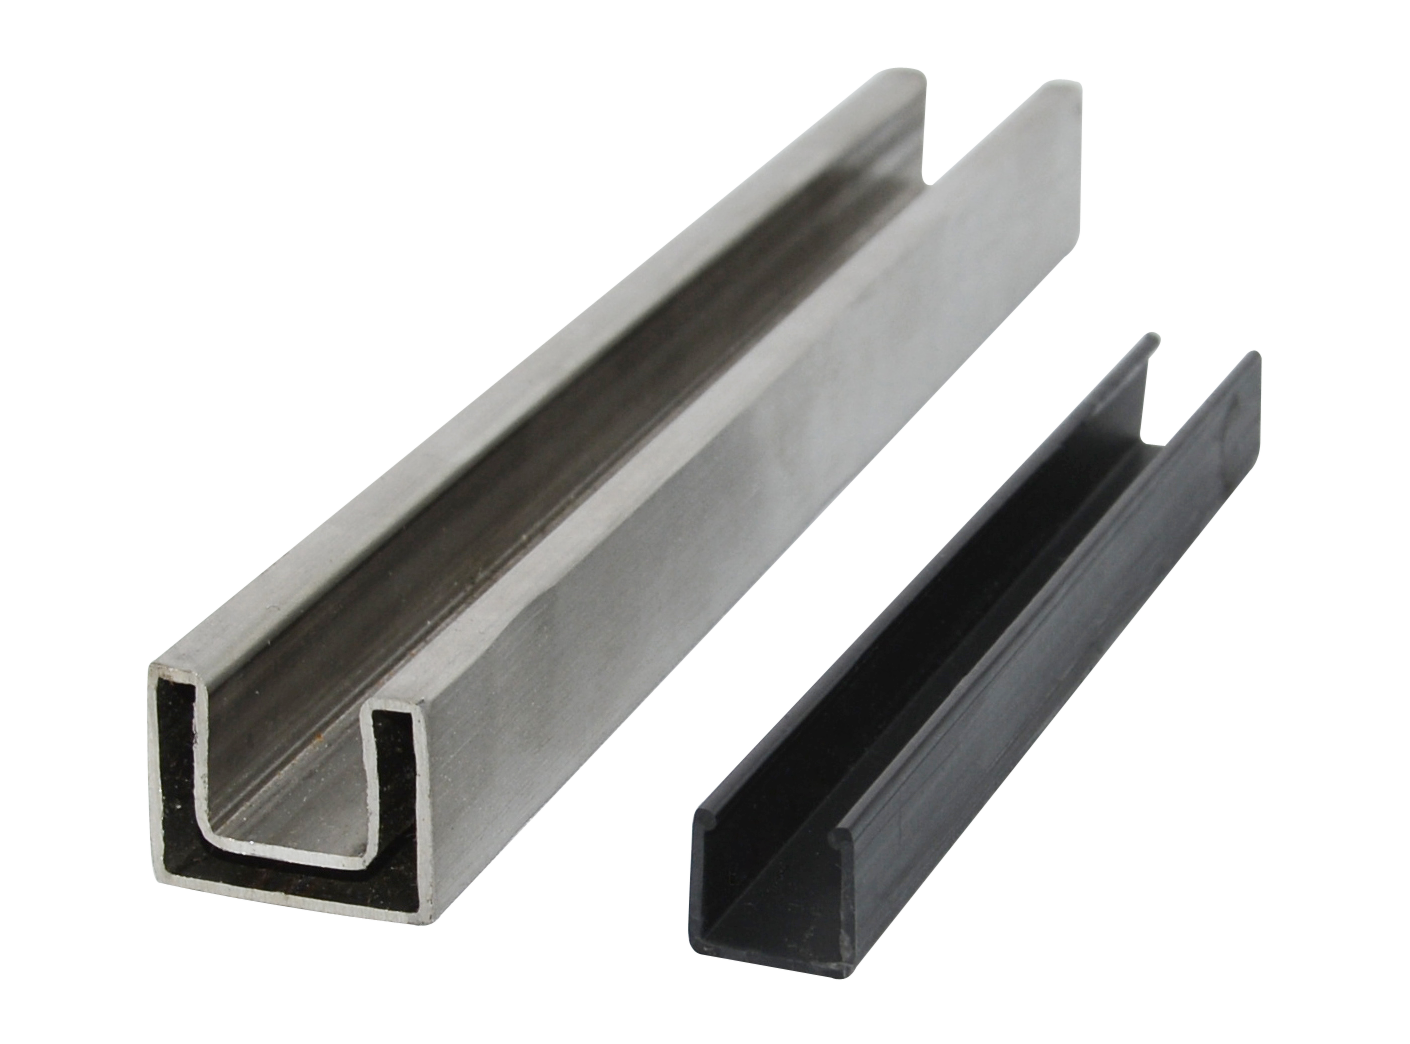 Stainless steel square slimline handrail tube 25x20mm for 10-12mm tempered glass